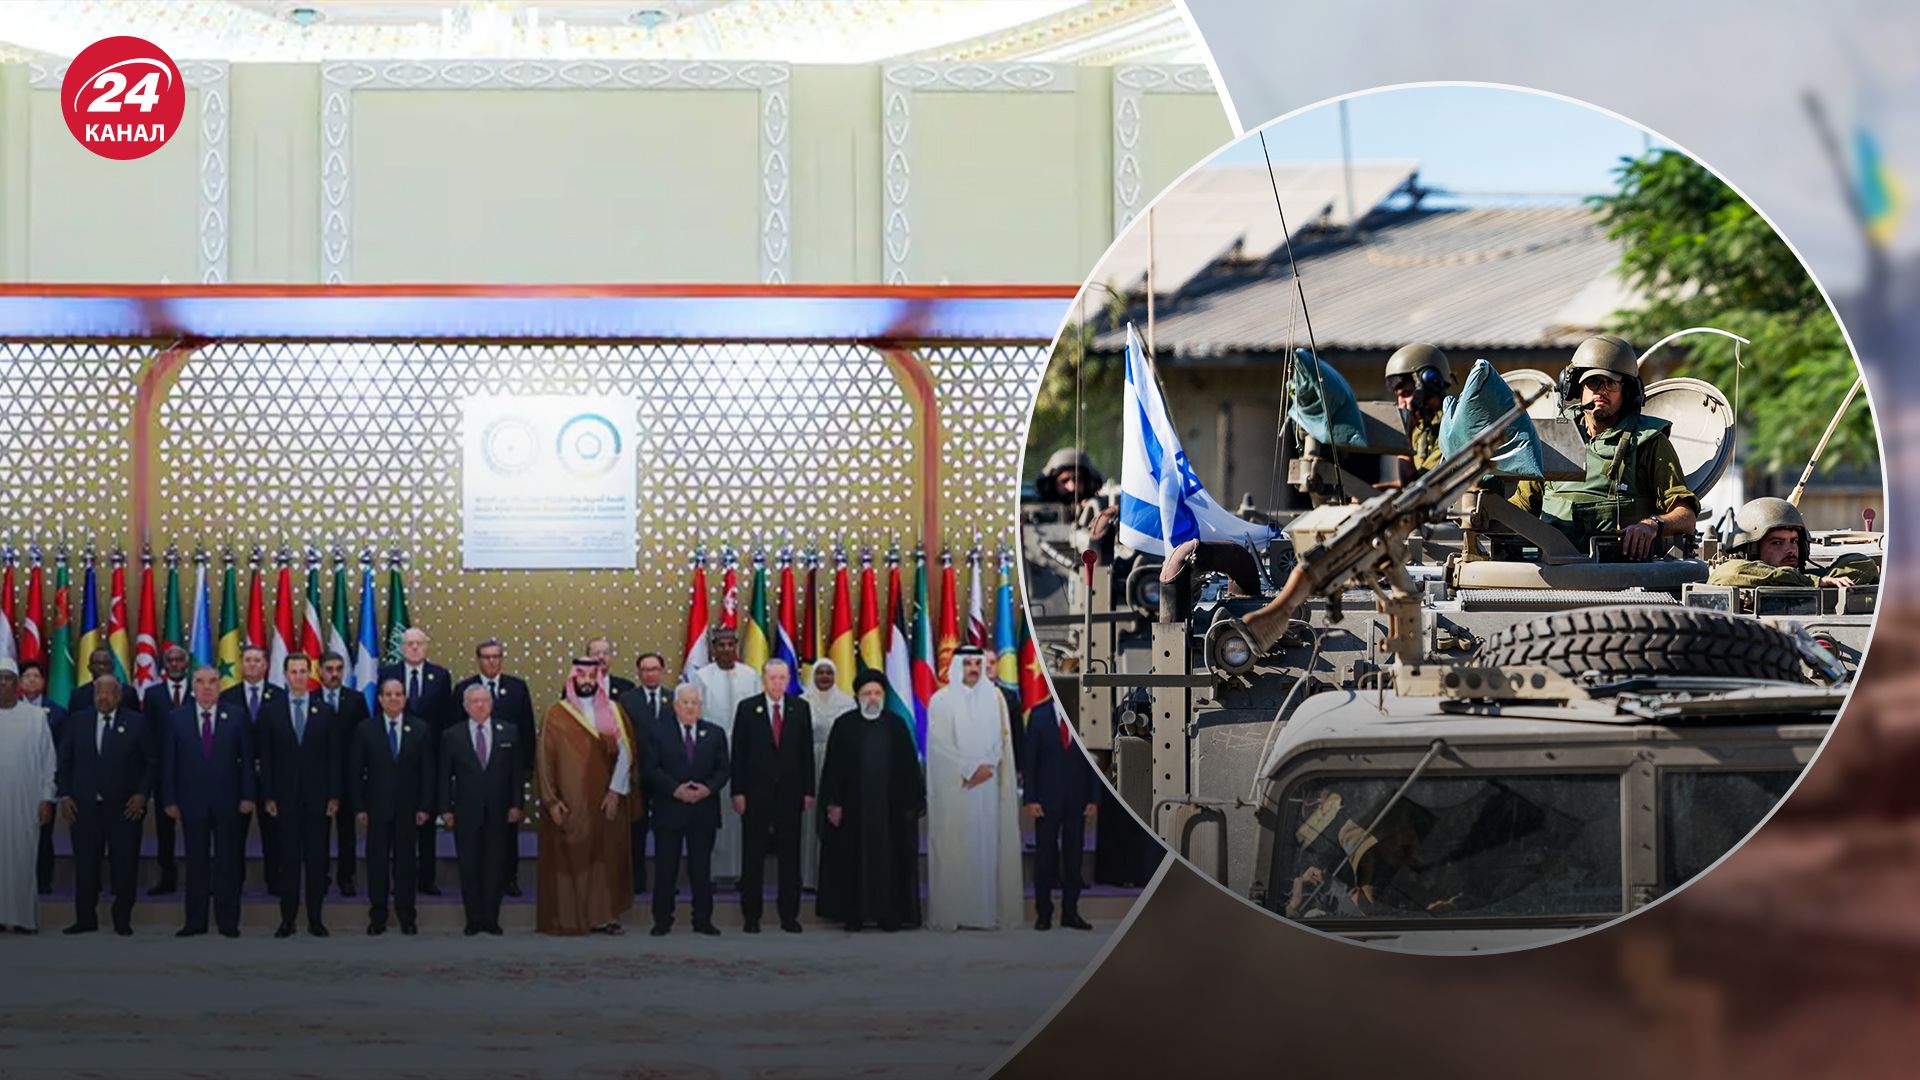 Війна між ХАМАС та Ізраїлем - як арабсько-ісламський саміт вплине на перебіг подій - 24 Канал